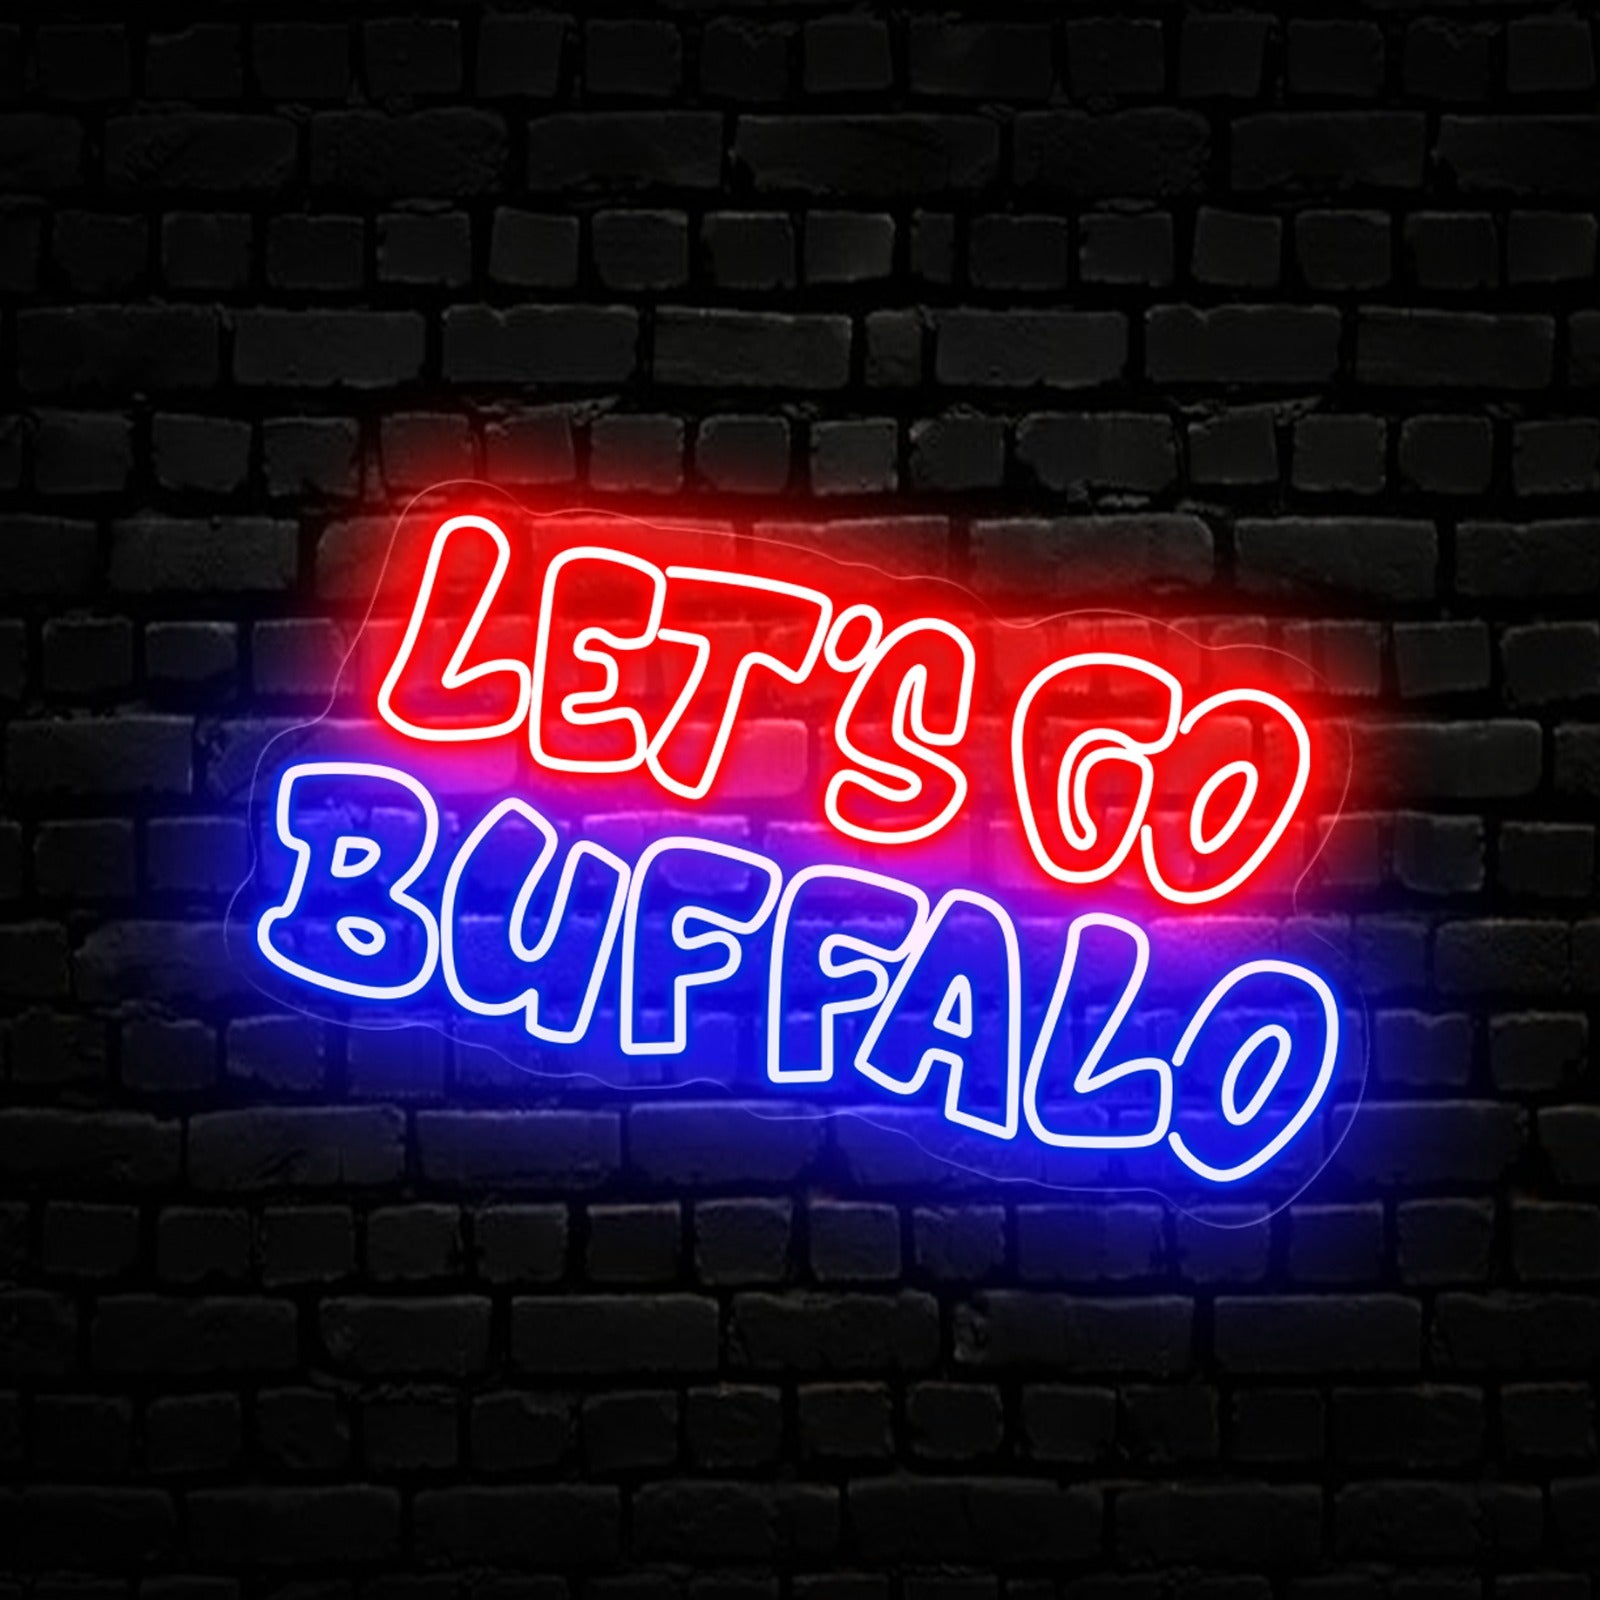 Let's Go Buffalo LED Neon Sign